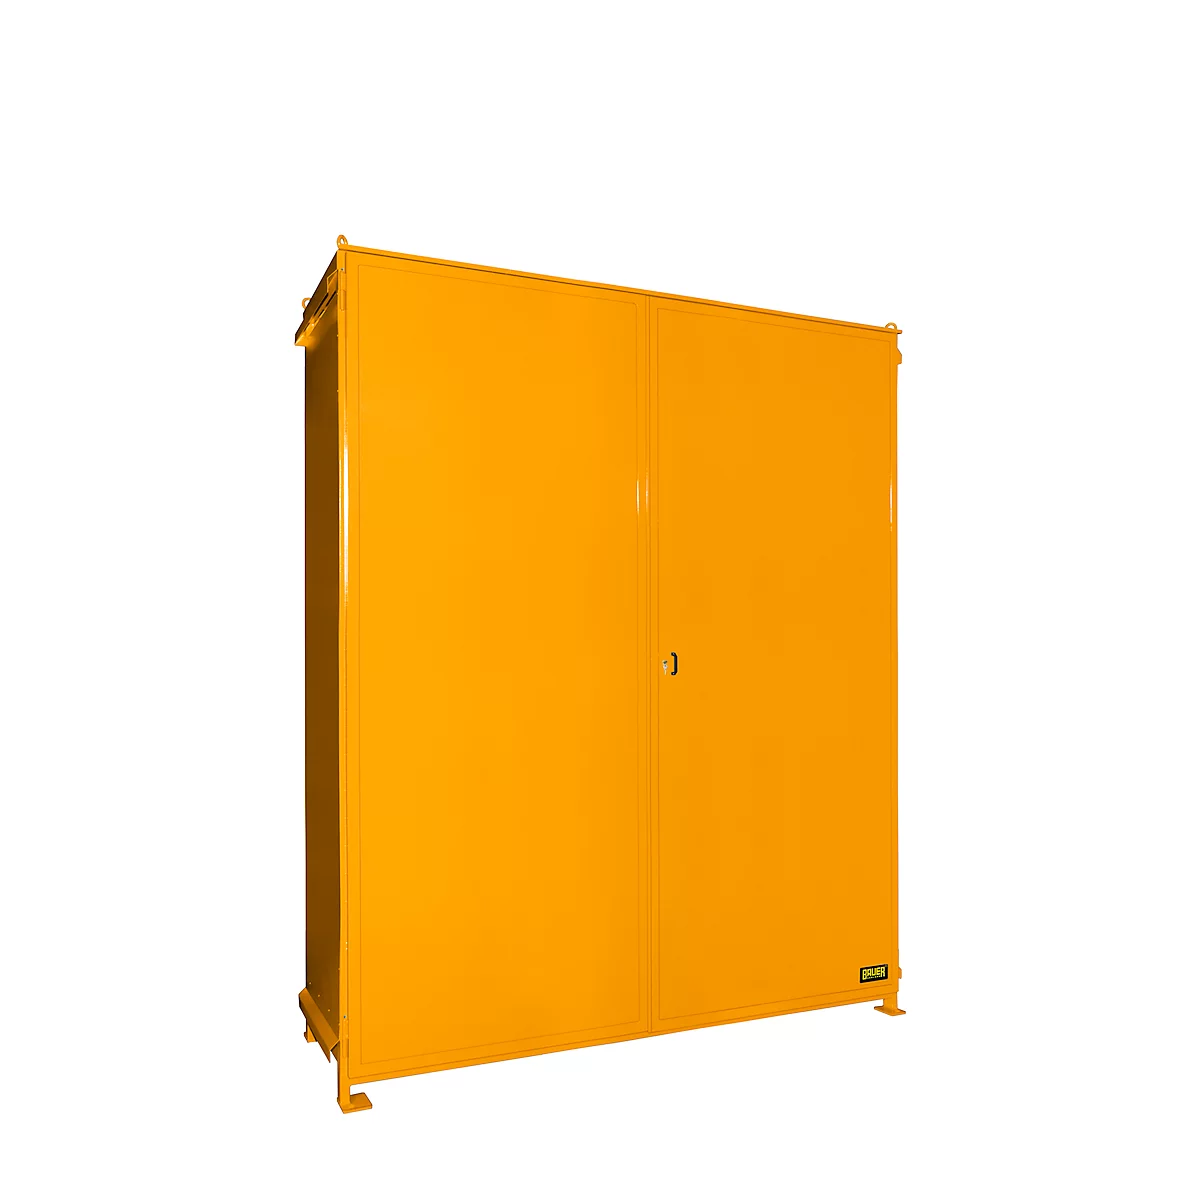 Contenedor de estantes BAUER CEN 36-3, acero, puerta de dos hojas, ancho 4195 x fondo 1585 x alto 4535 mm, naranja